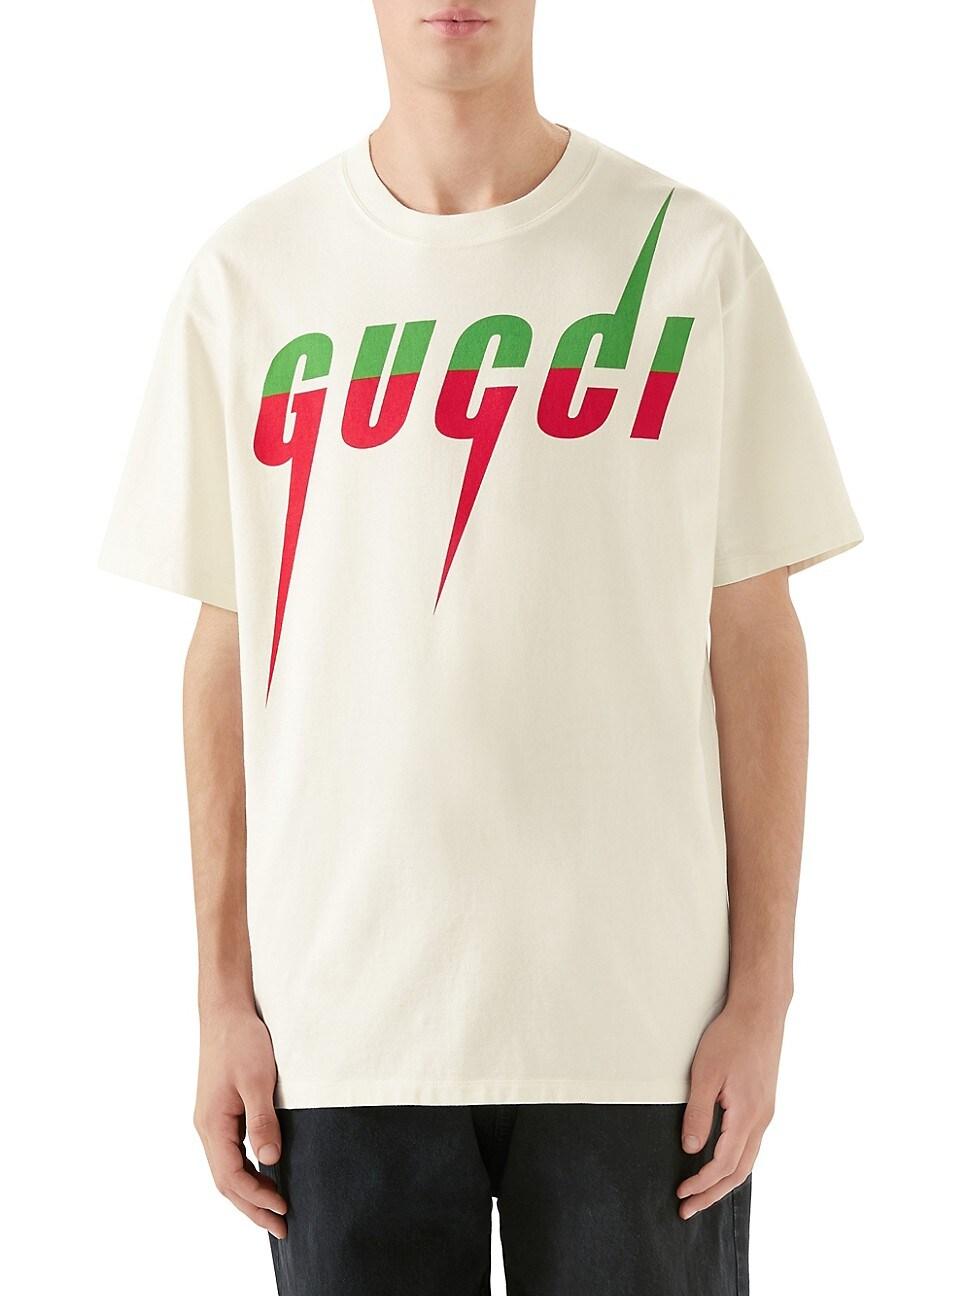 Gucci blade t shirt - munimoro.gob.pe